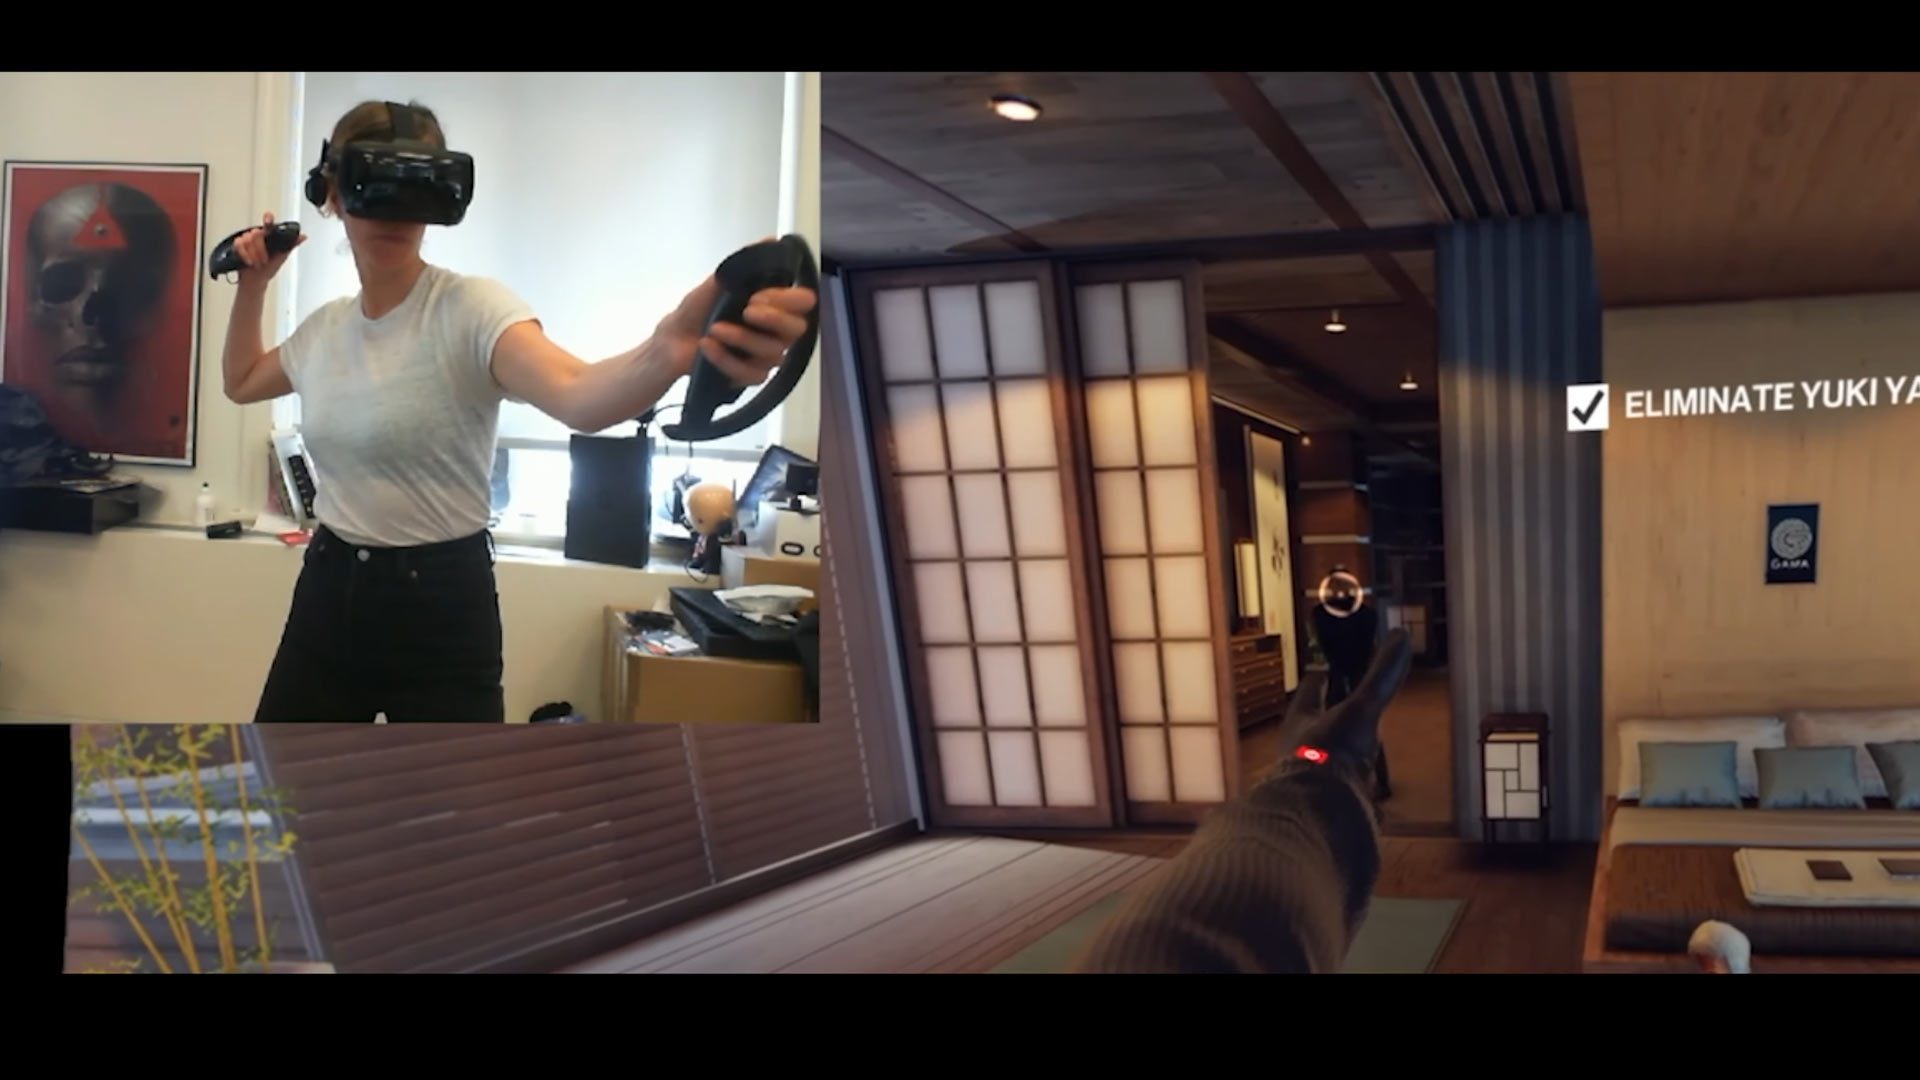 Hitman 3' VR Gameplay Revealed In Latest Trailer - VRScout